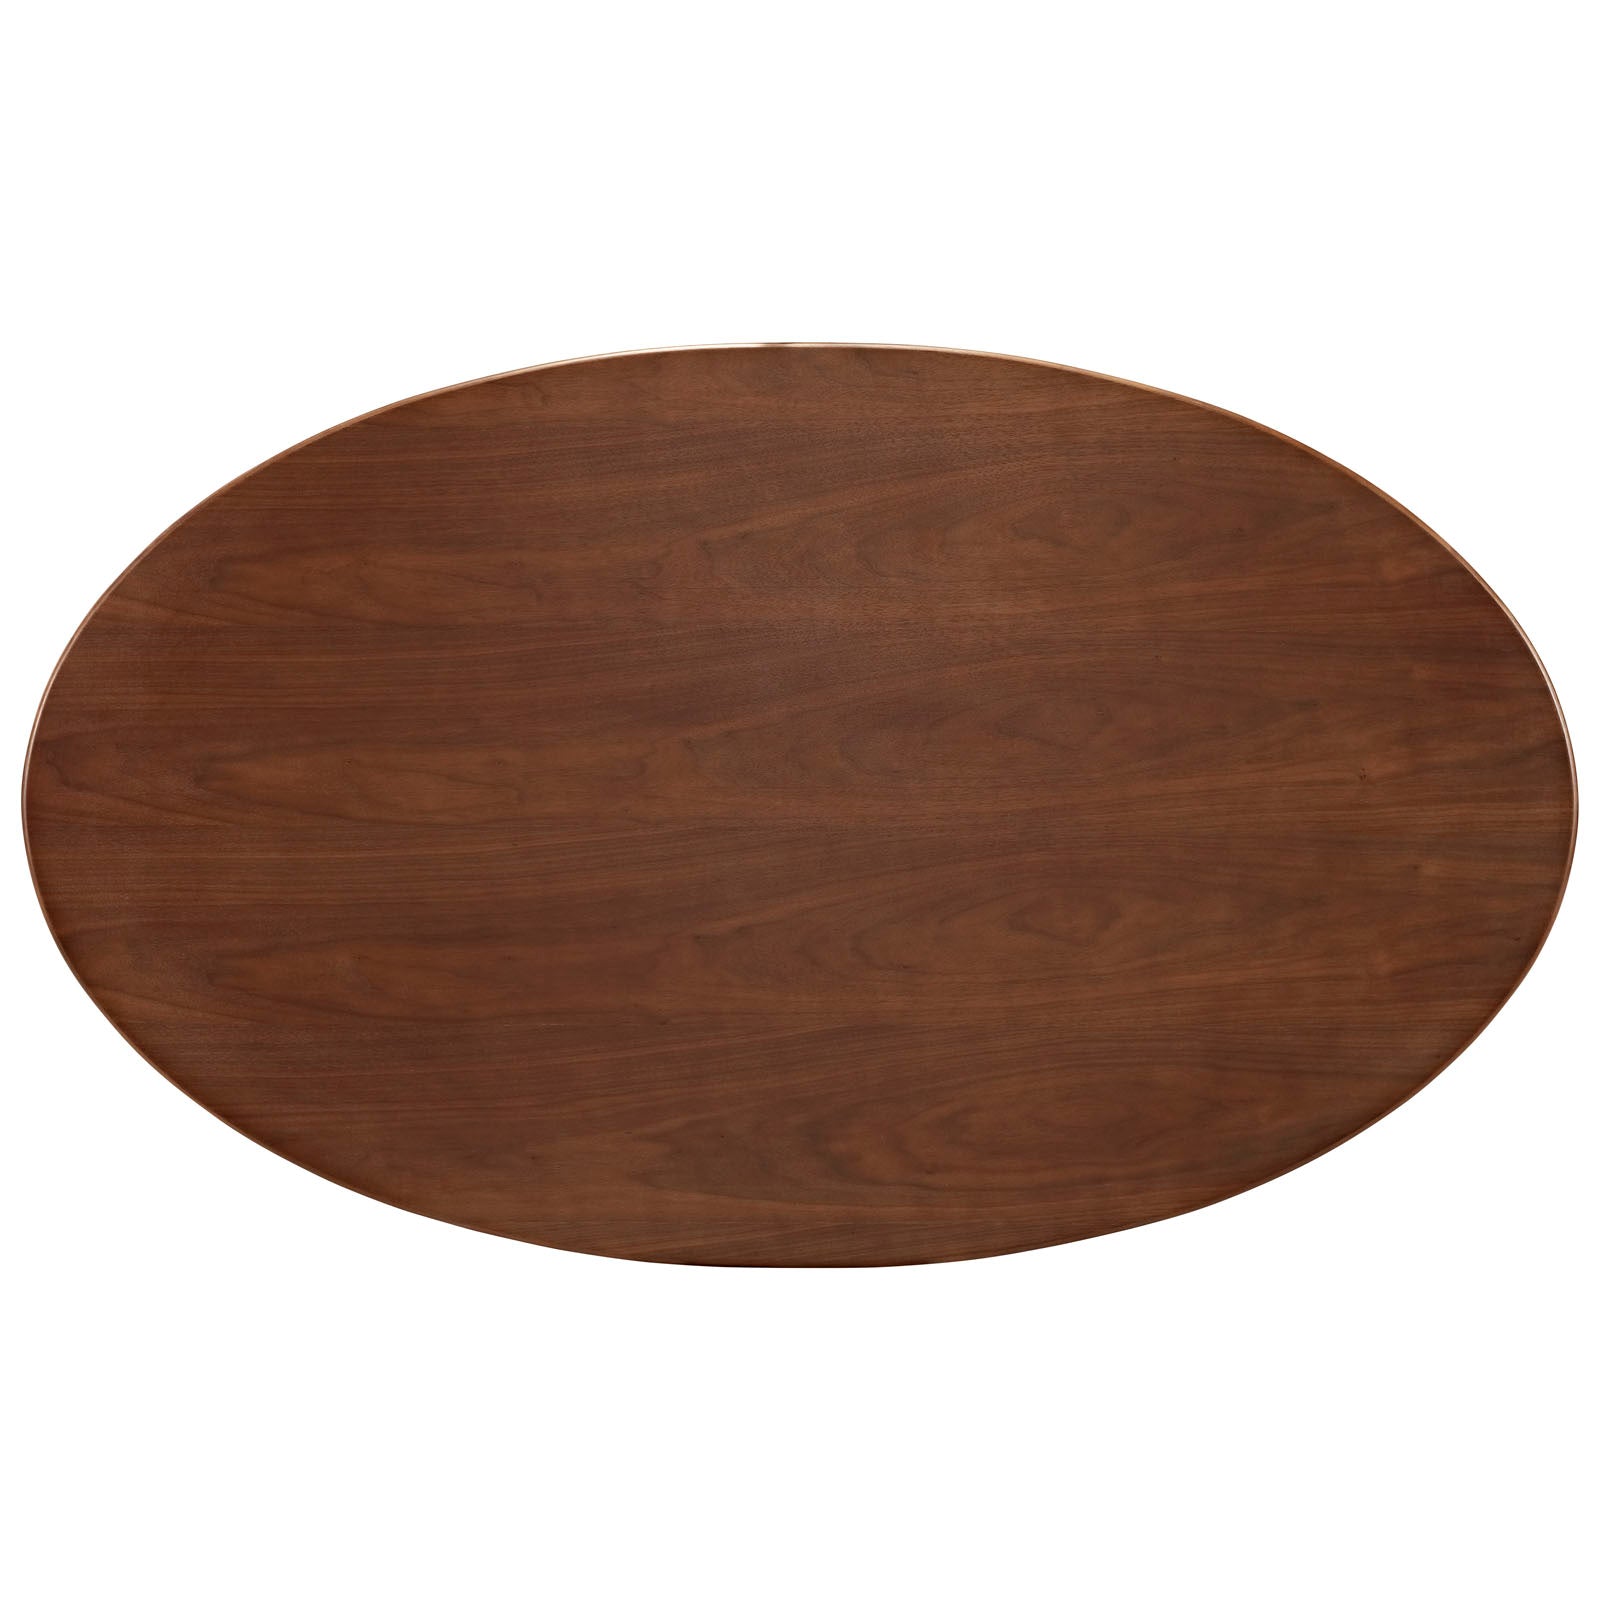 Lippa 60" Oval Walnut Dining Table